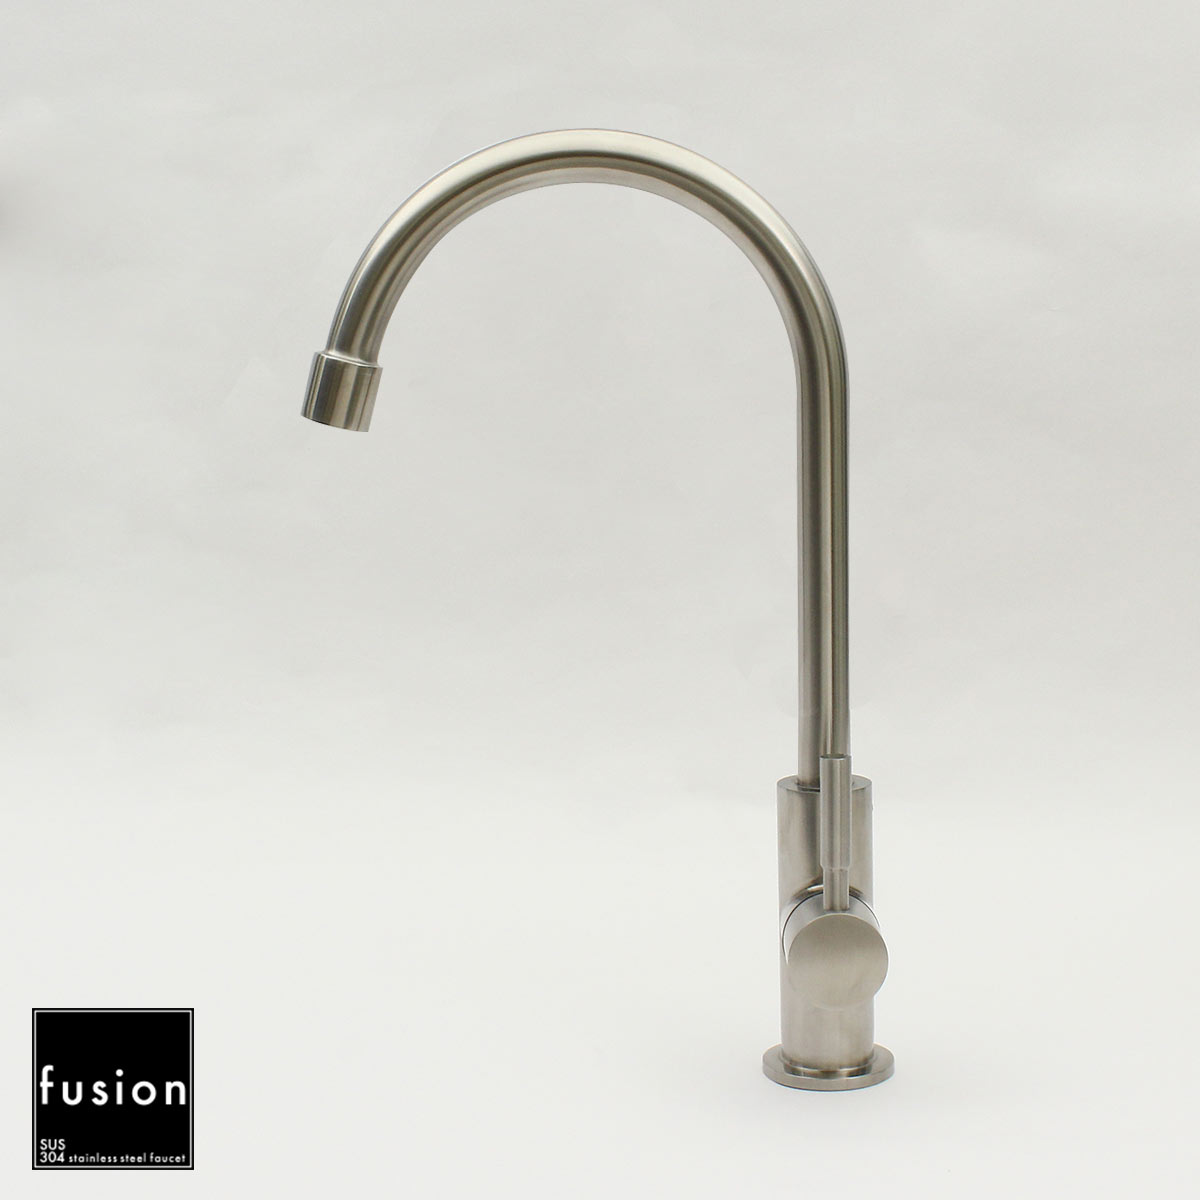 【fusion】SSL1211 ステンレス・スワン単水栓 高耐久でおしゃれなステンレス製水栓金具の通販